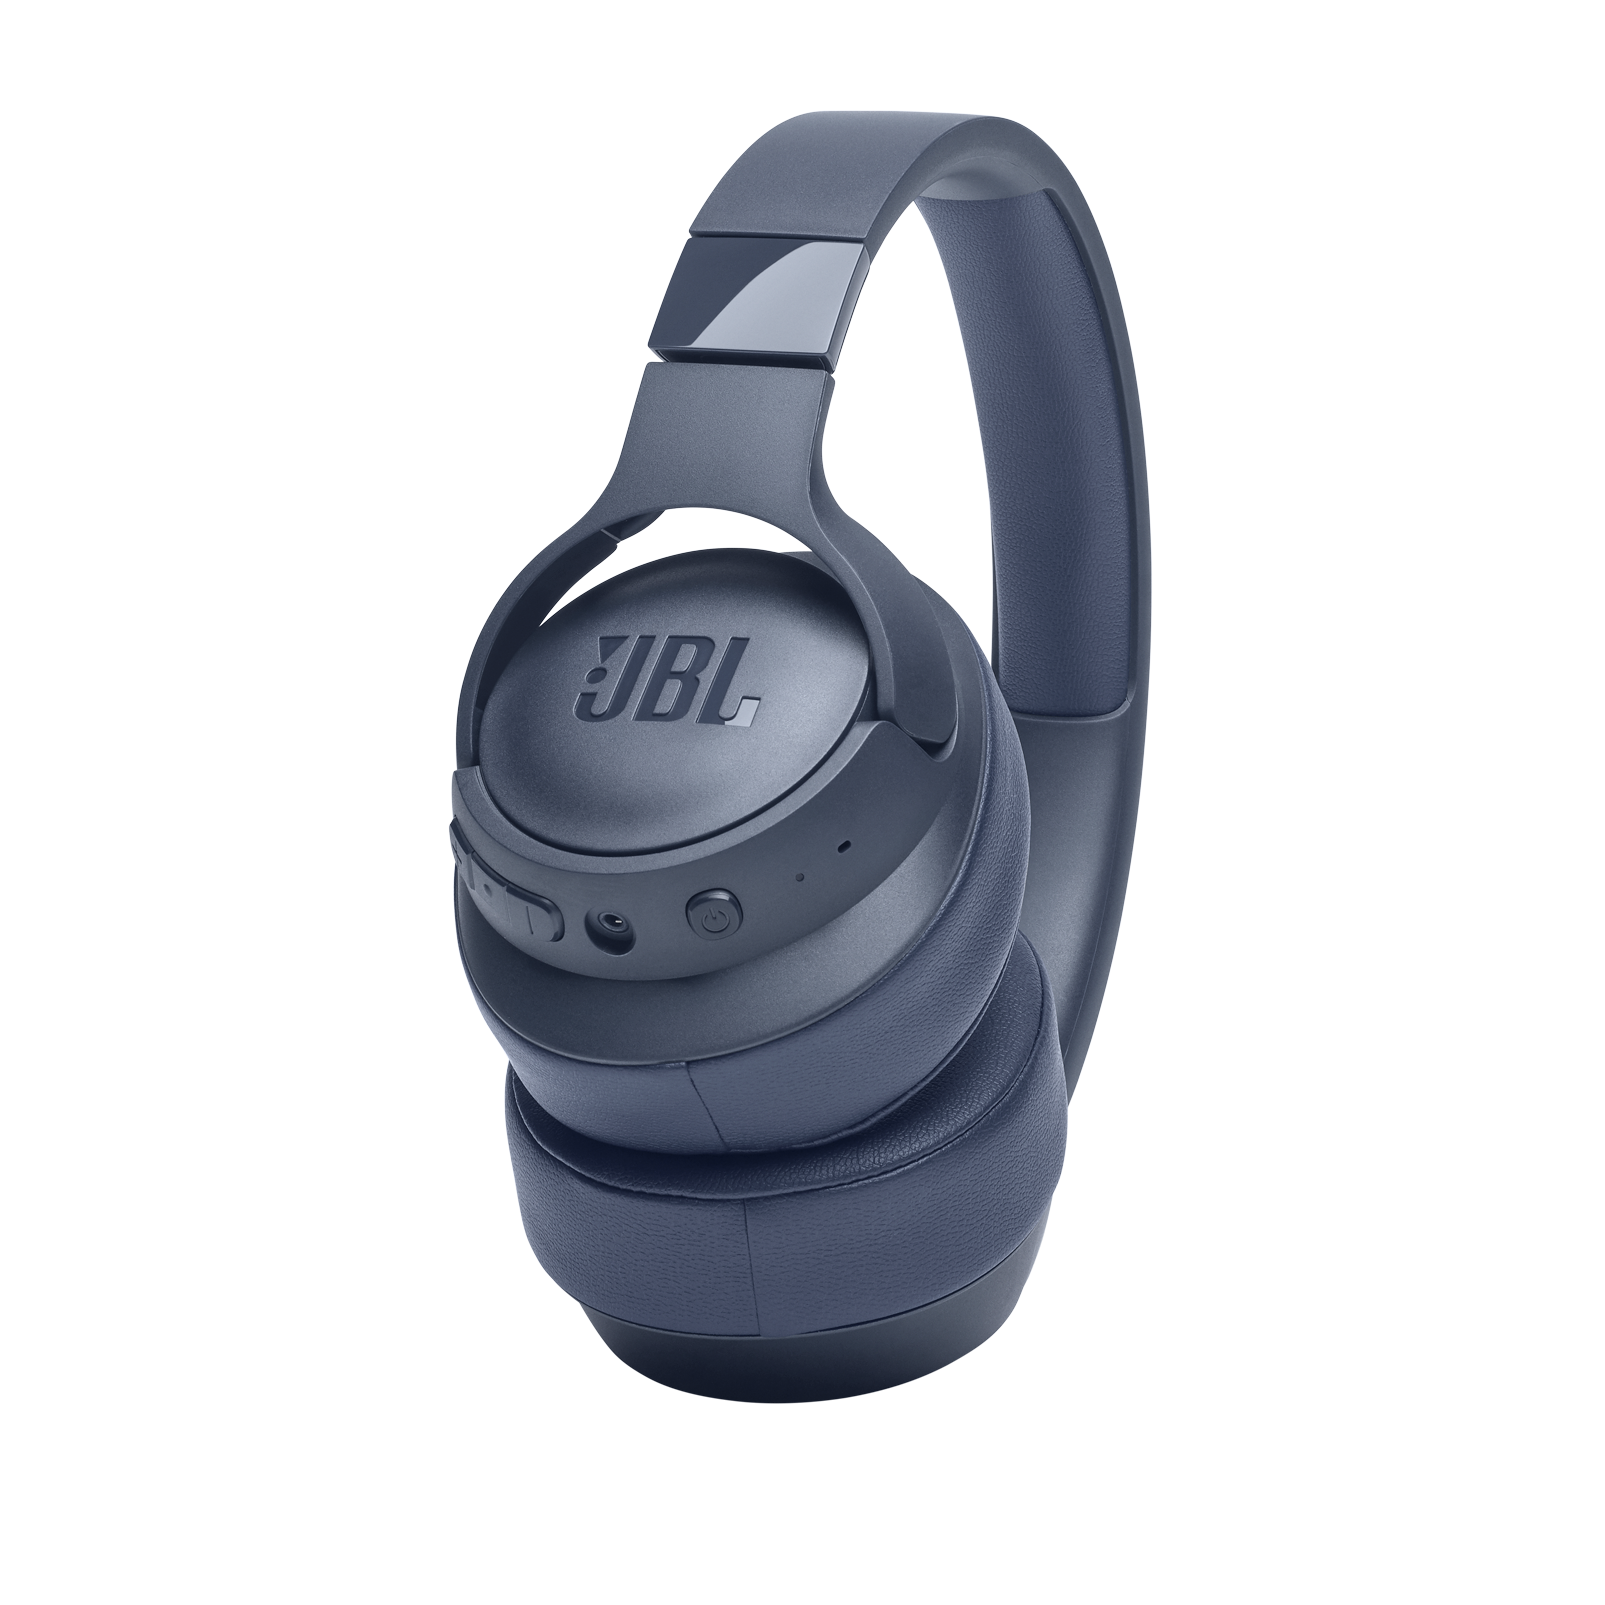 JBL Tune 710BT - Blue - Wireless Over-Ear Headphones - Detailshot 1